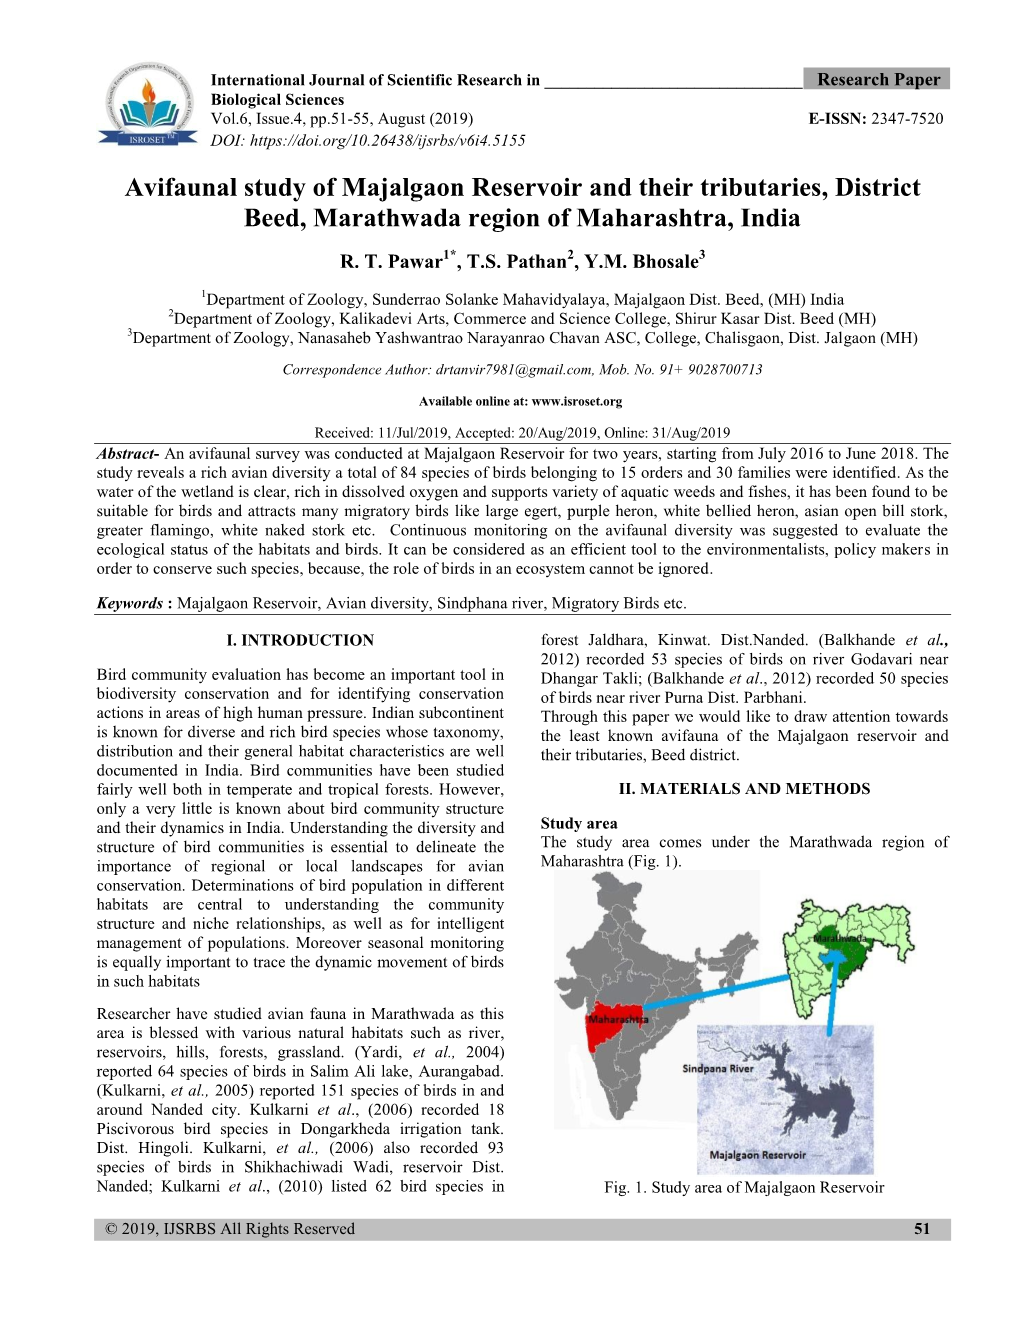 Avifaunal Study of Majalgaon Reservoir and Their Tributaries, District Beed, Marathwada Region of Maharashtra, India